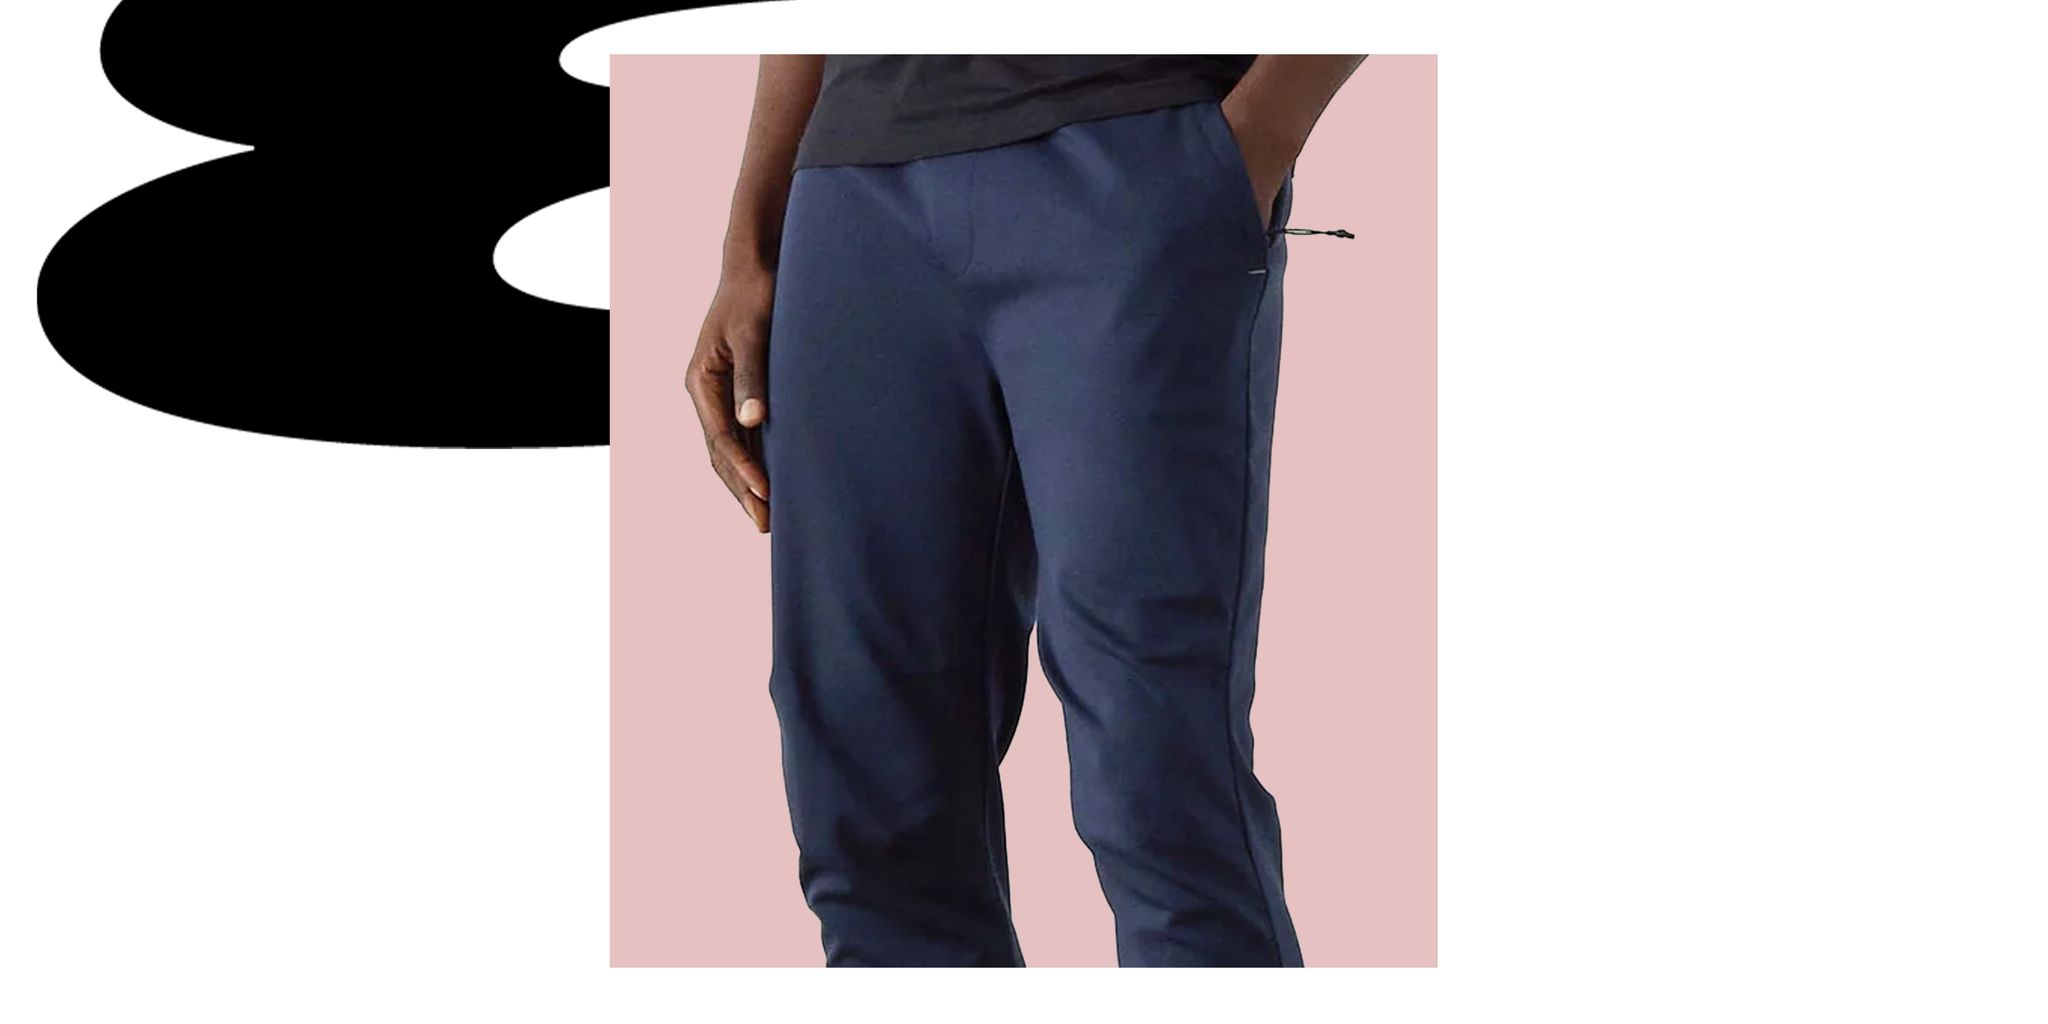 Lululemon Athletica Black Active Pants Size 10 - 44% off